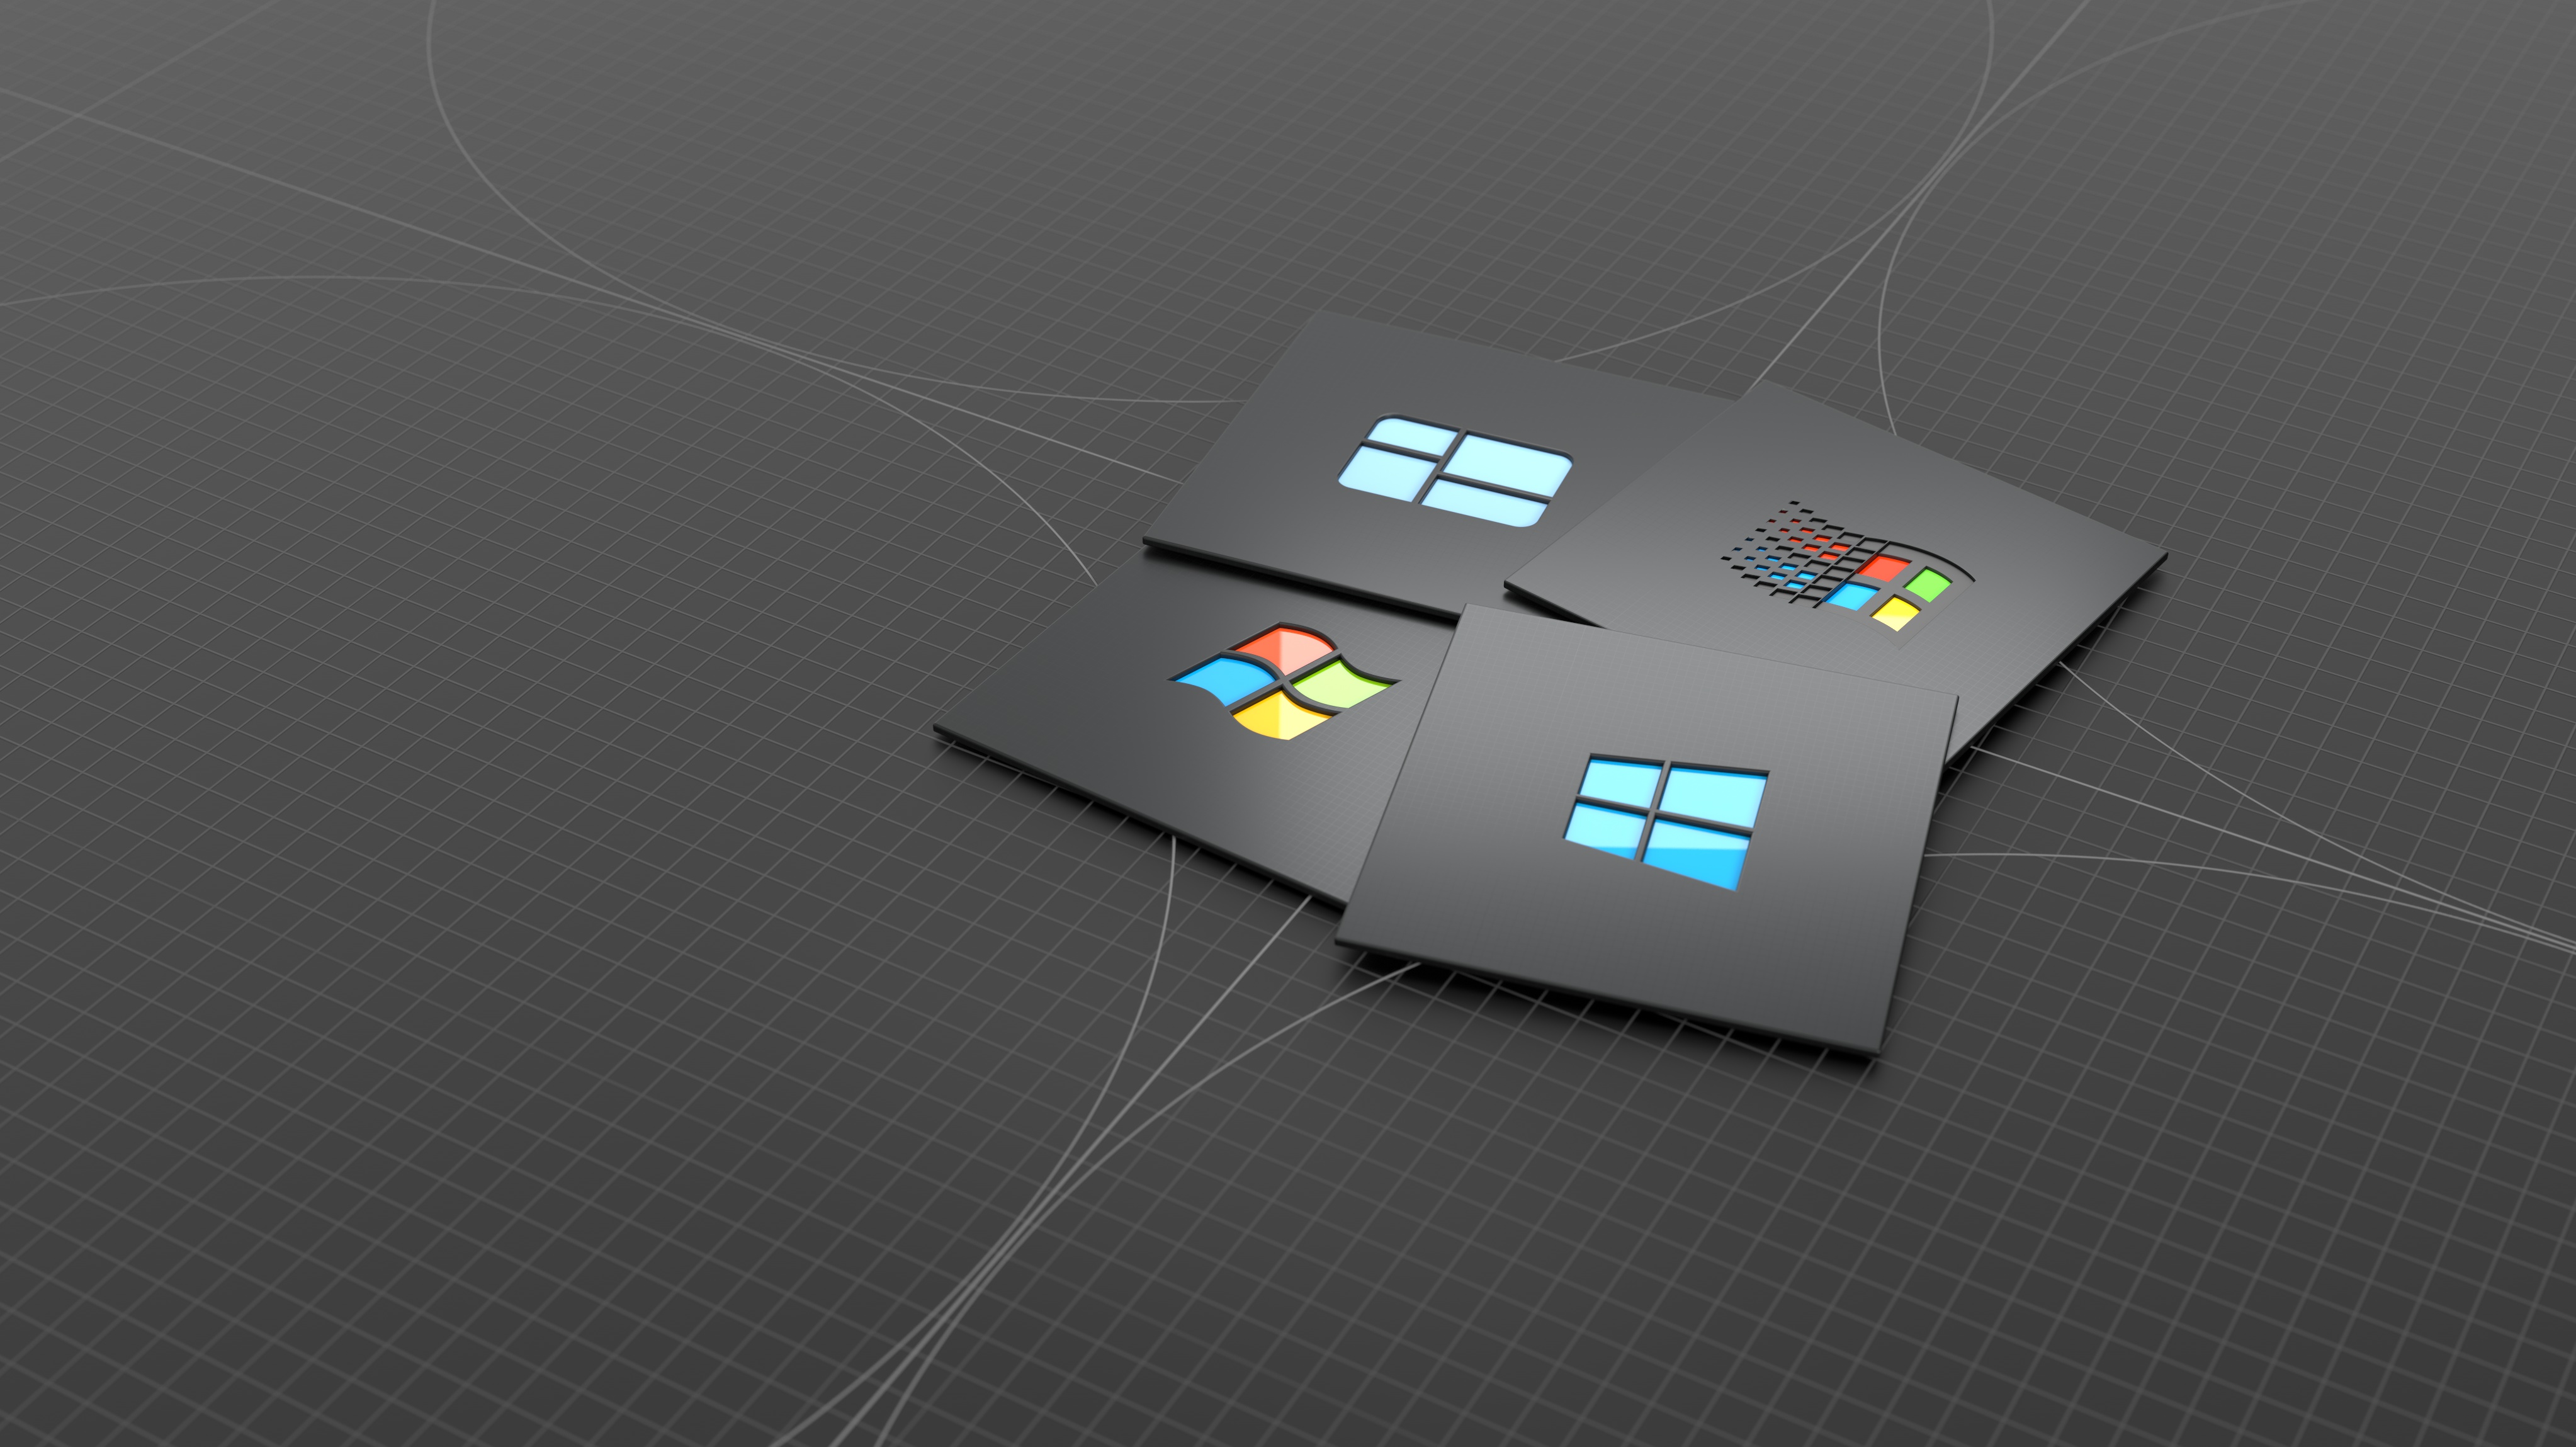 Windows 10 Windows Logo Windows 7 Microsoft Windows 95 Windows 8 4092x2298